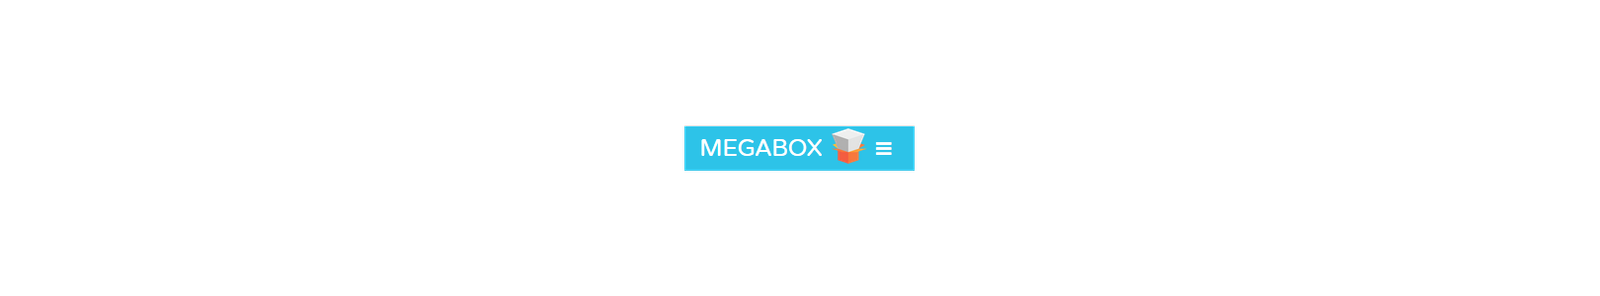 Megabox.me Premium Reseller India & Worldwide